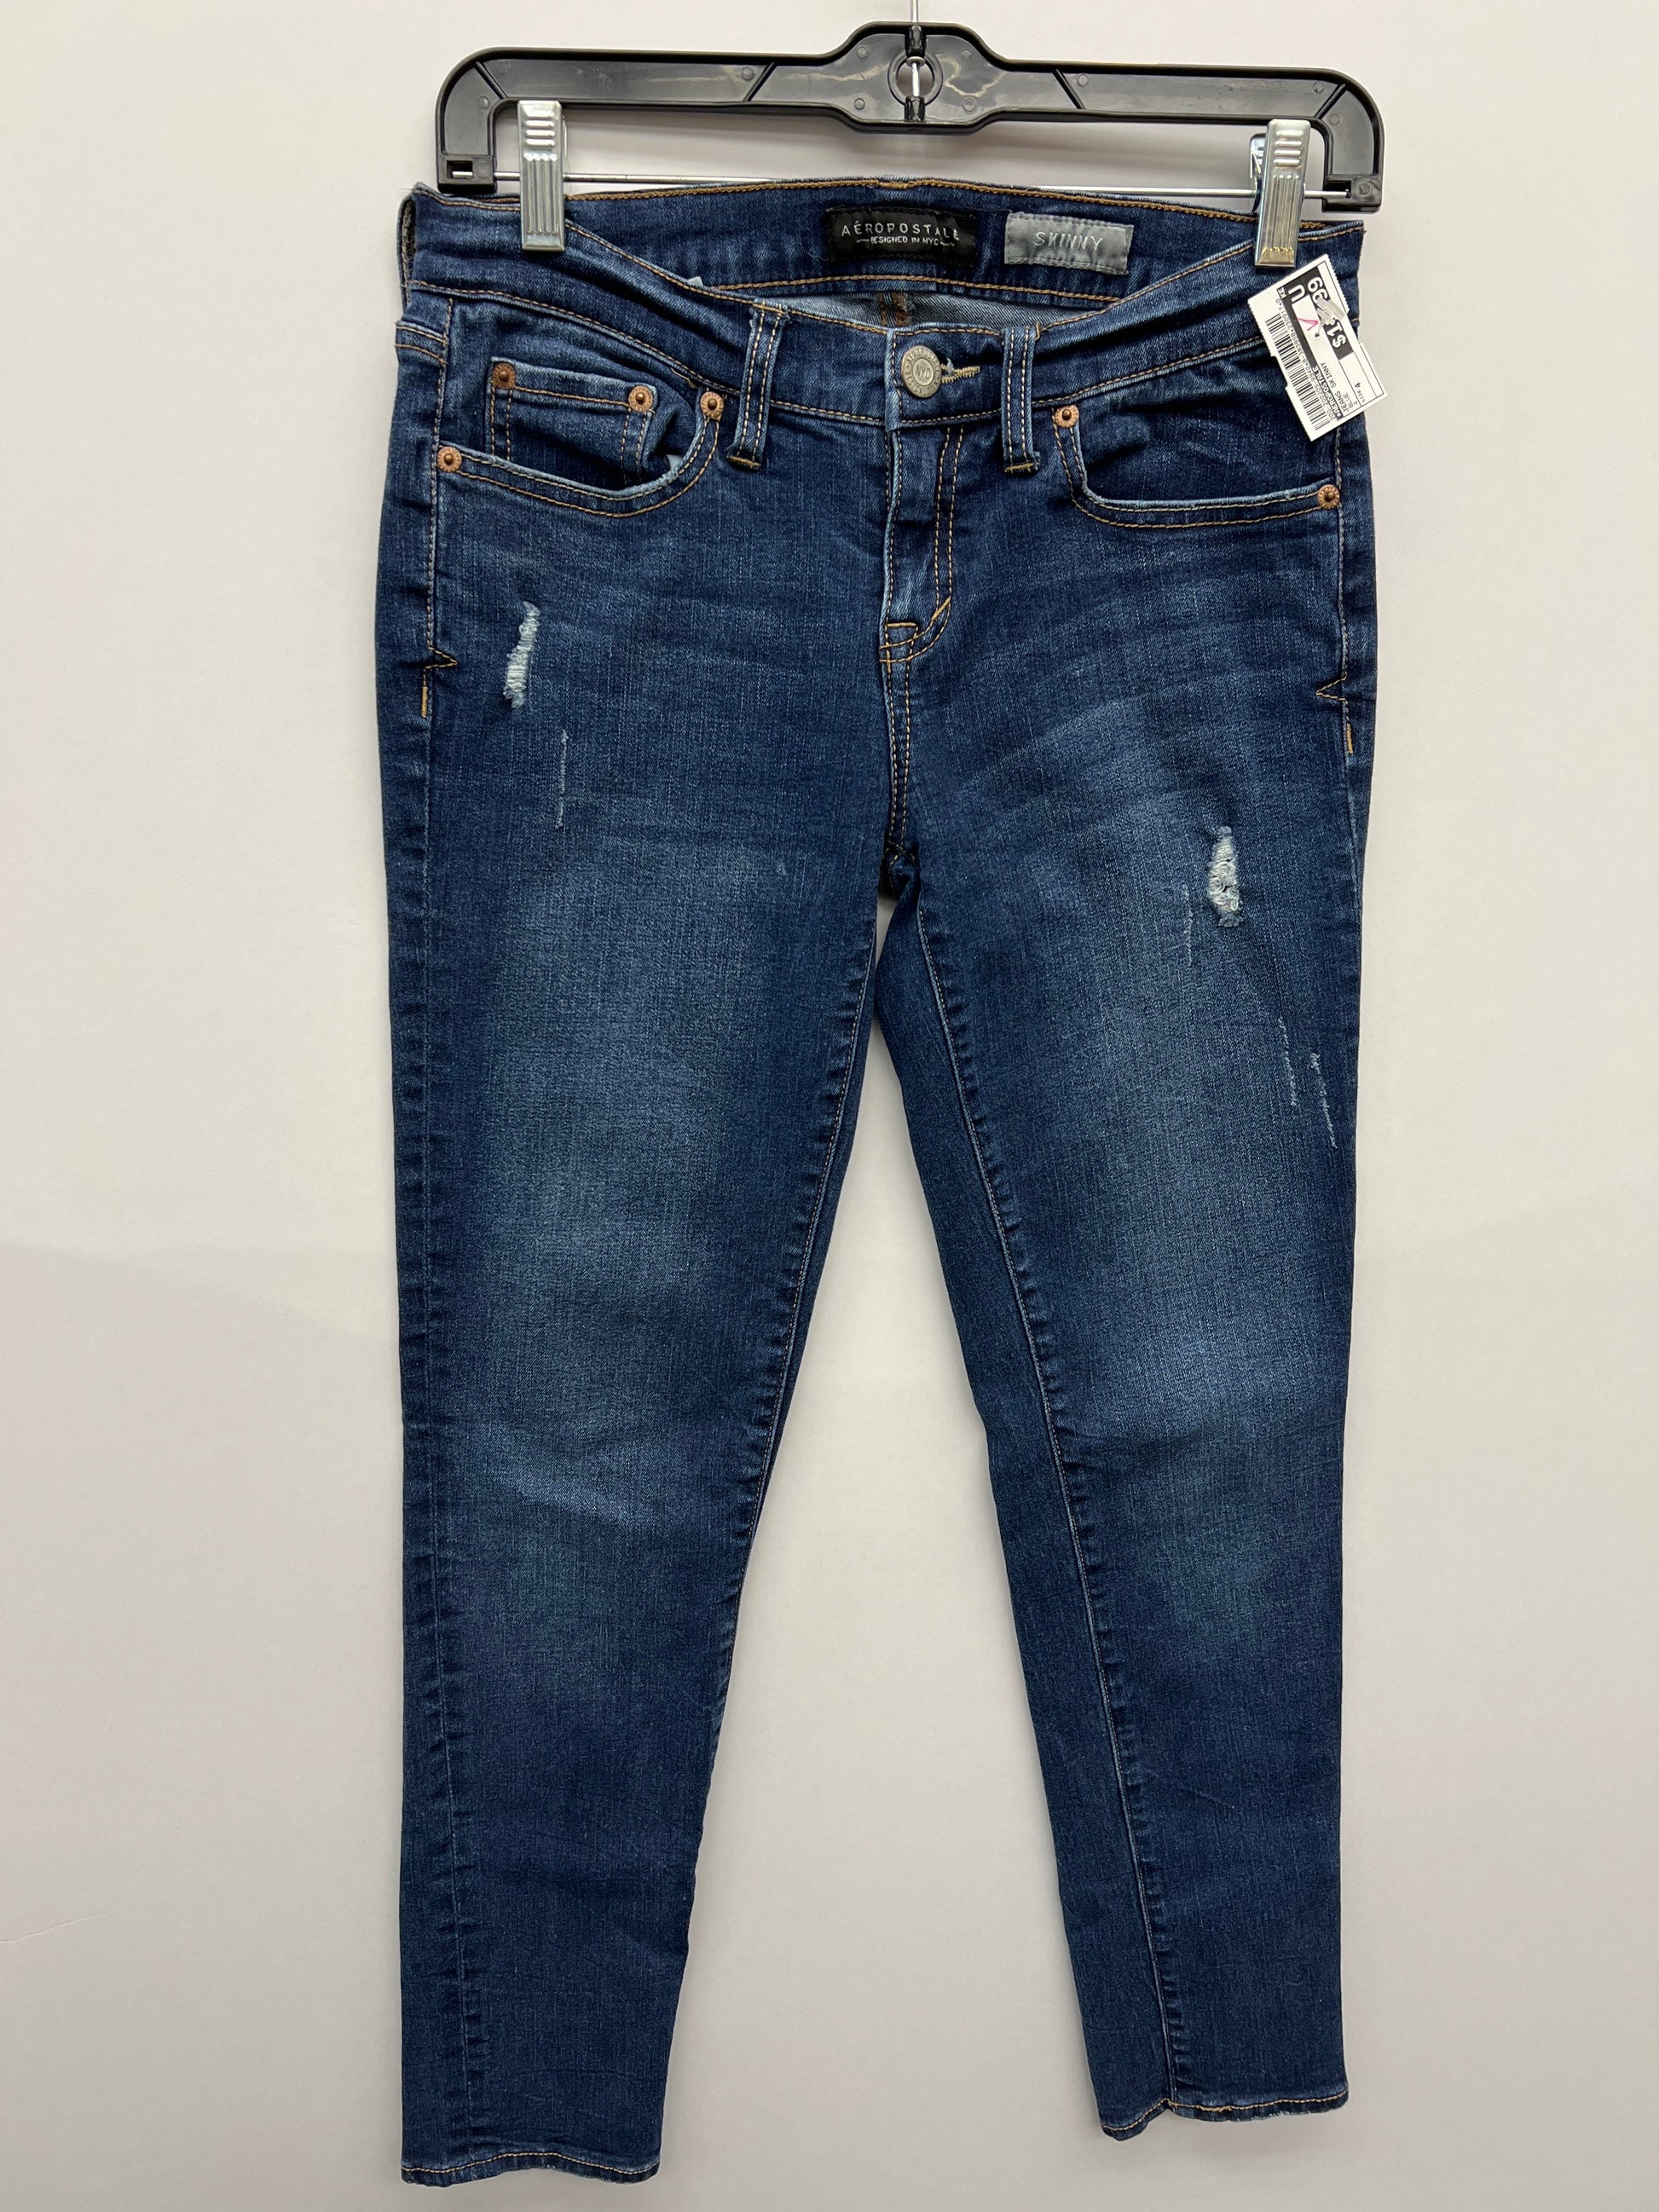 Jeans Skinny By Aeropostale Size: 4